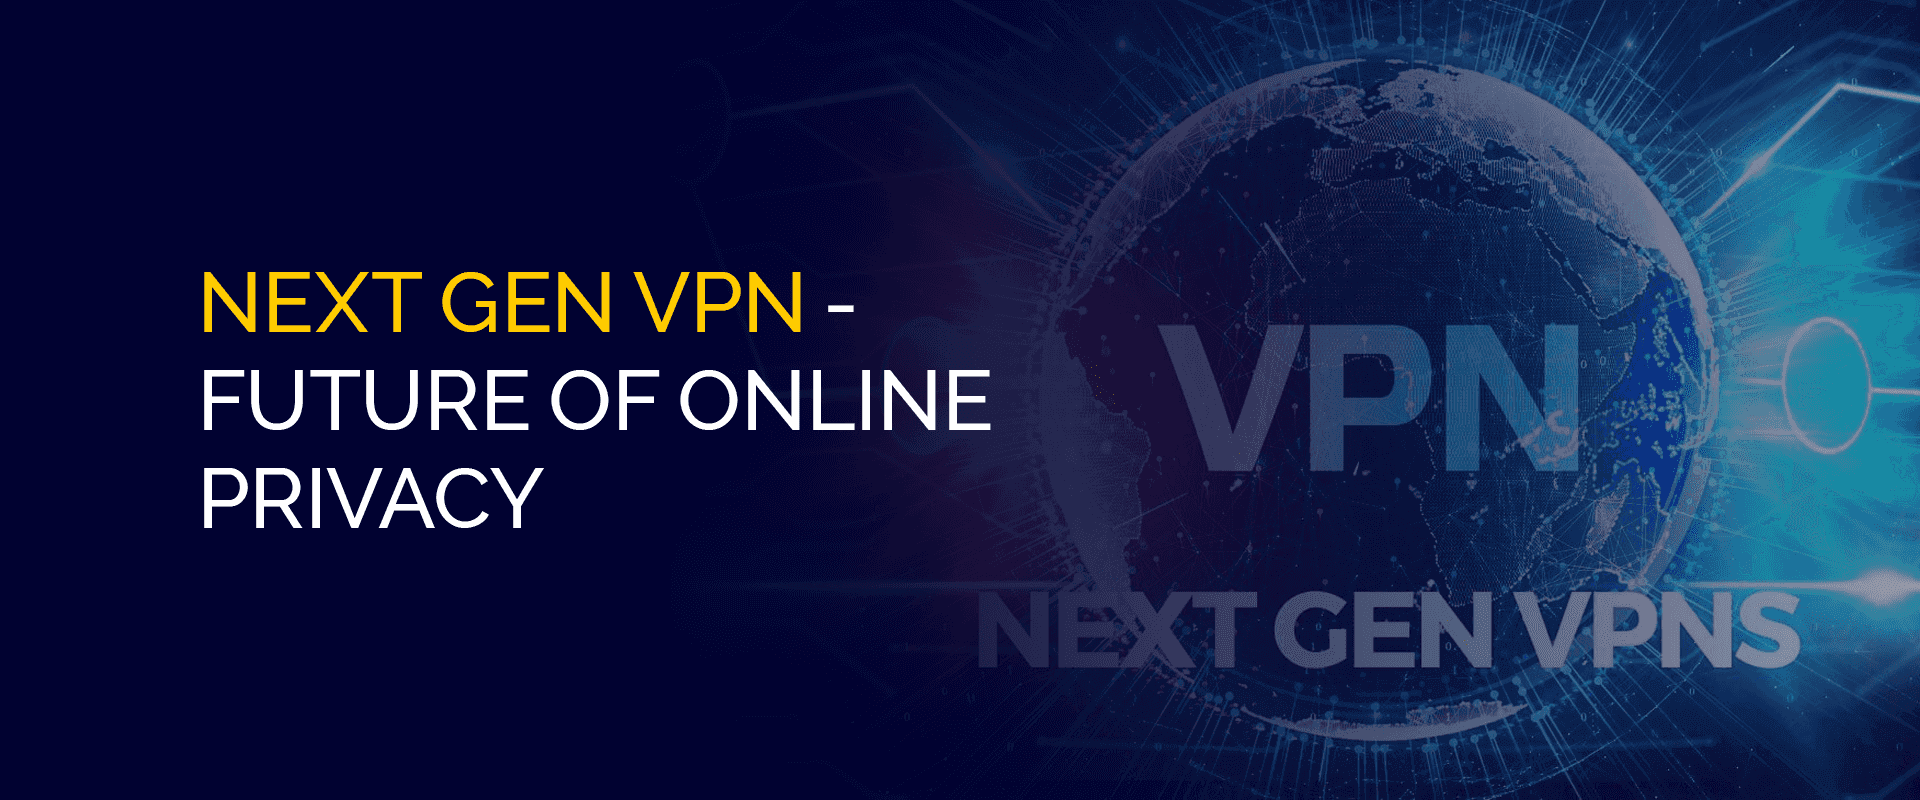 Next Gen VPN - Future of Online Privacy